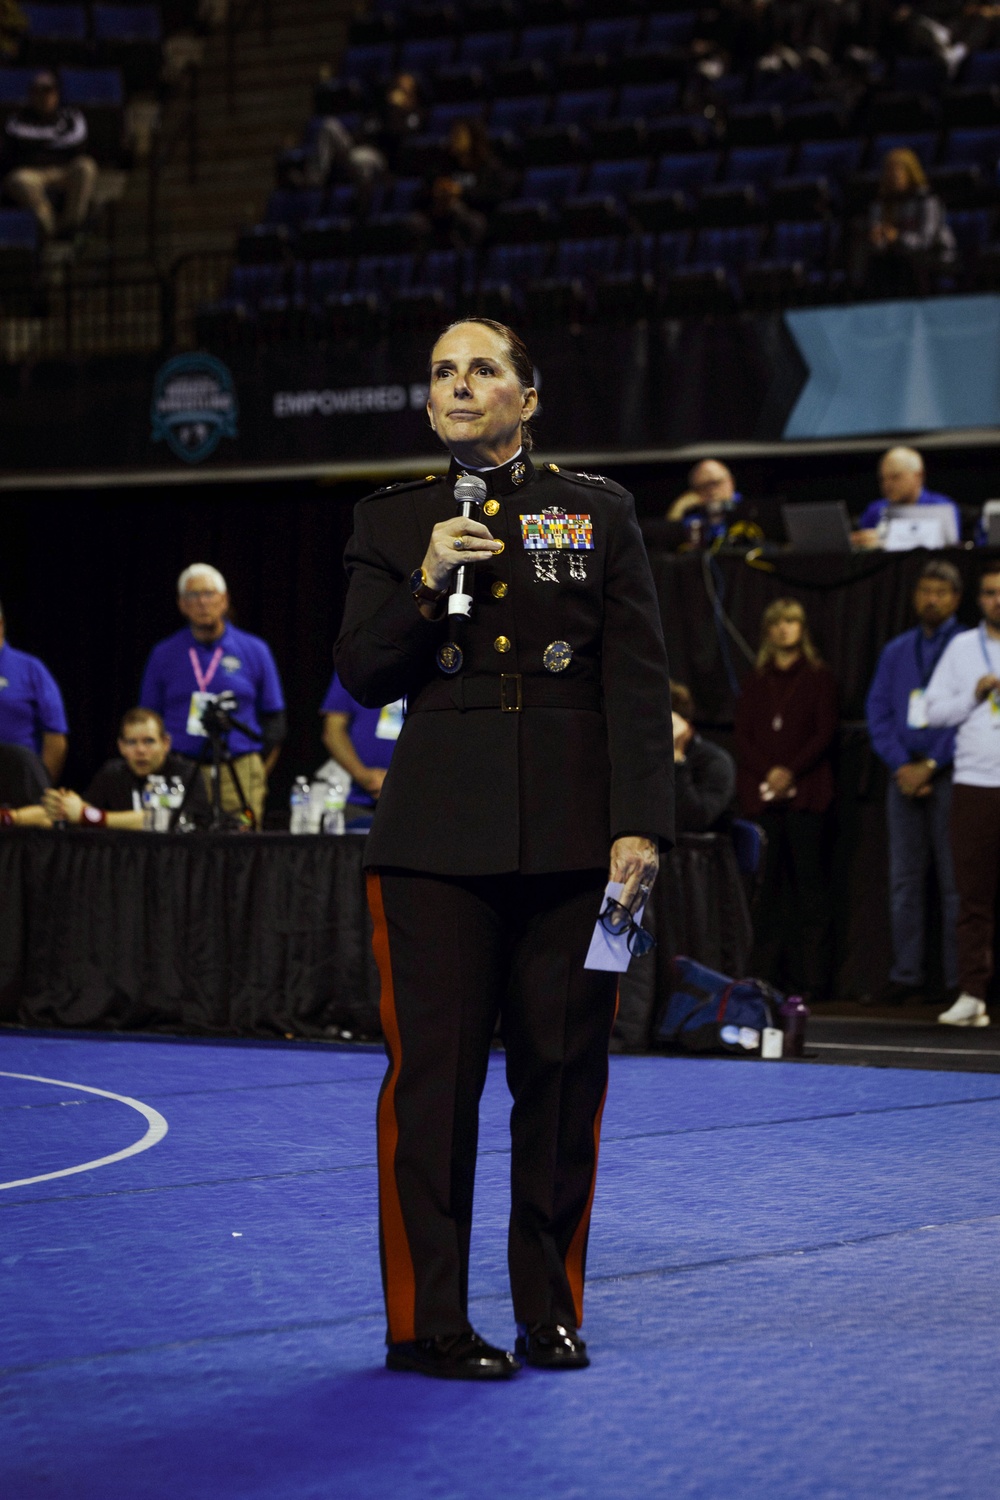 Major General Shea speaks at the National Collegiate Women’s Wrestling Championship in Cedar Rapids